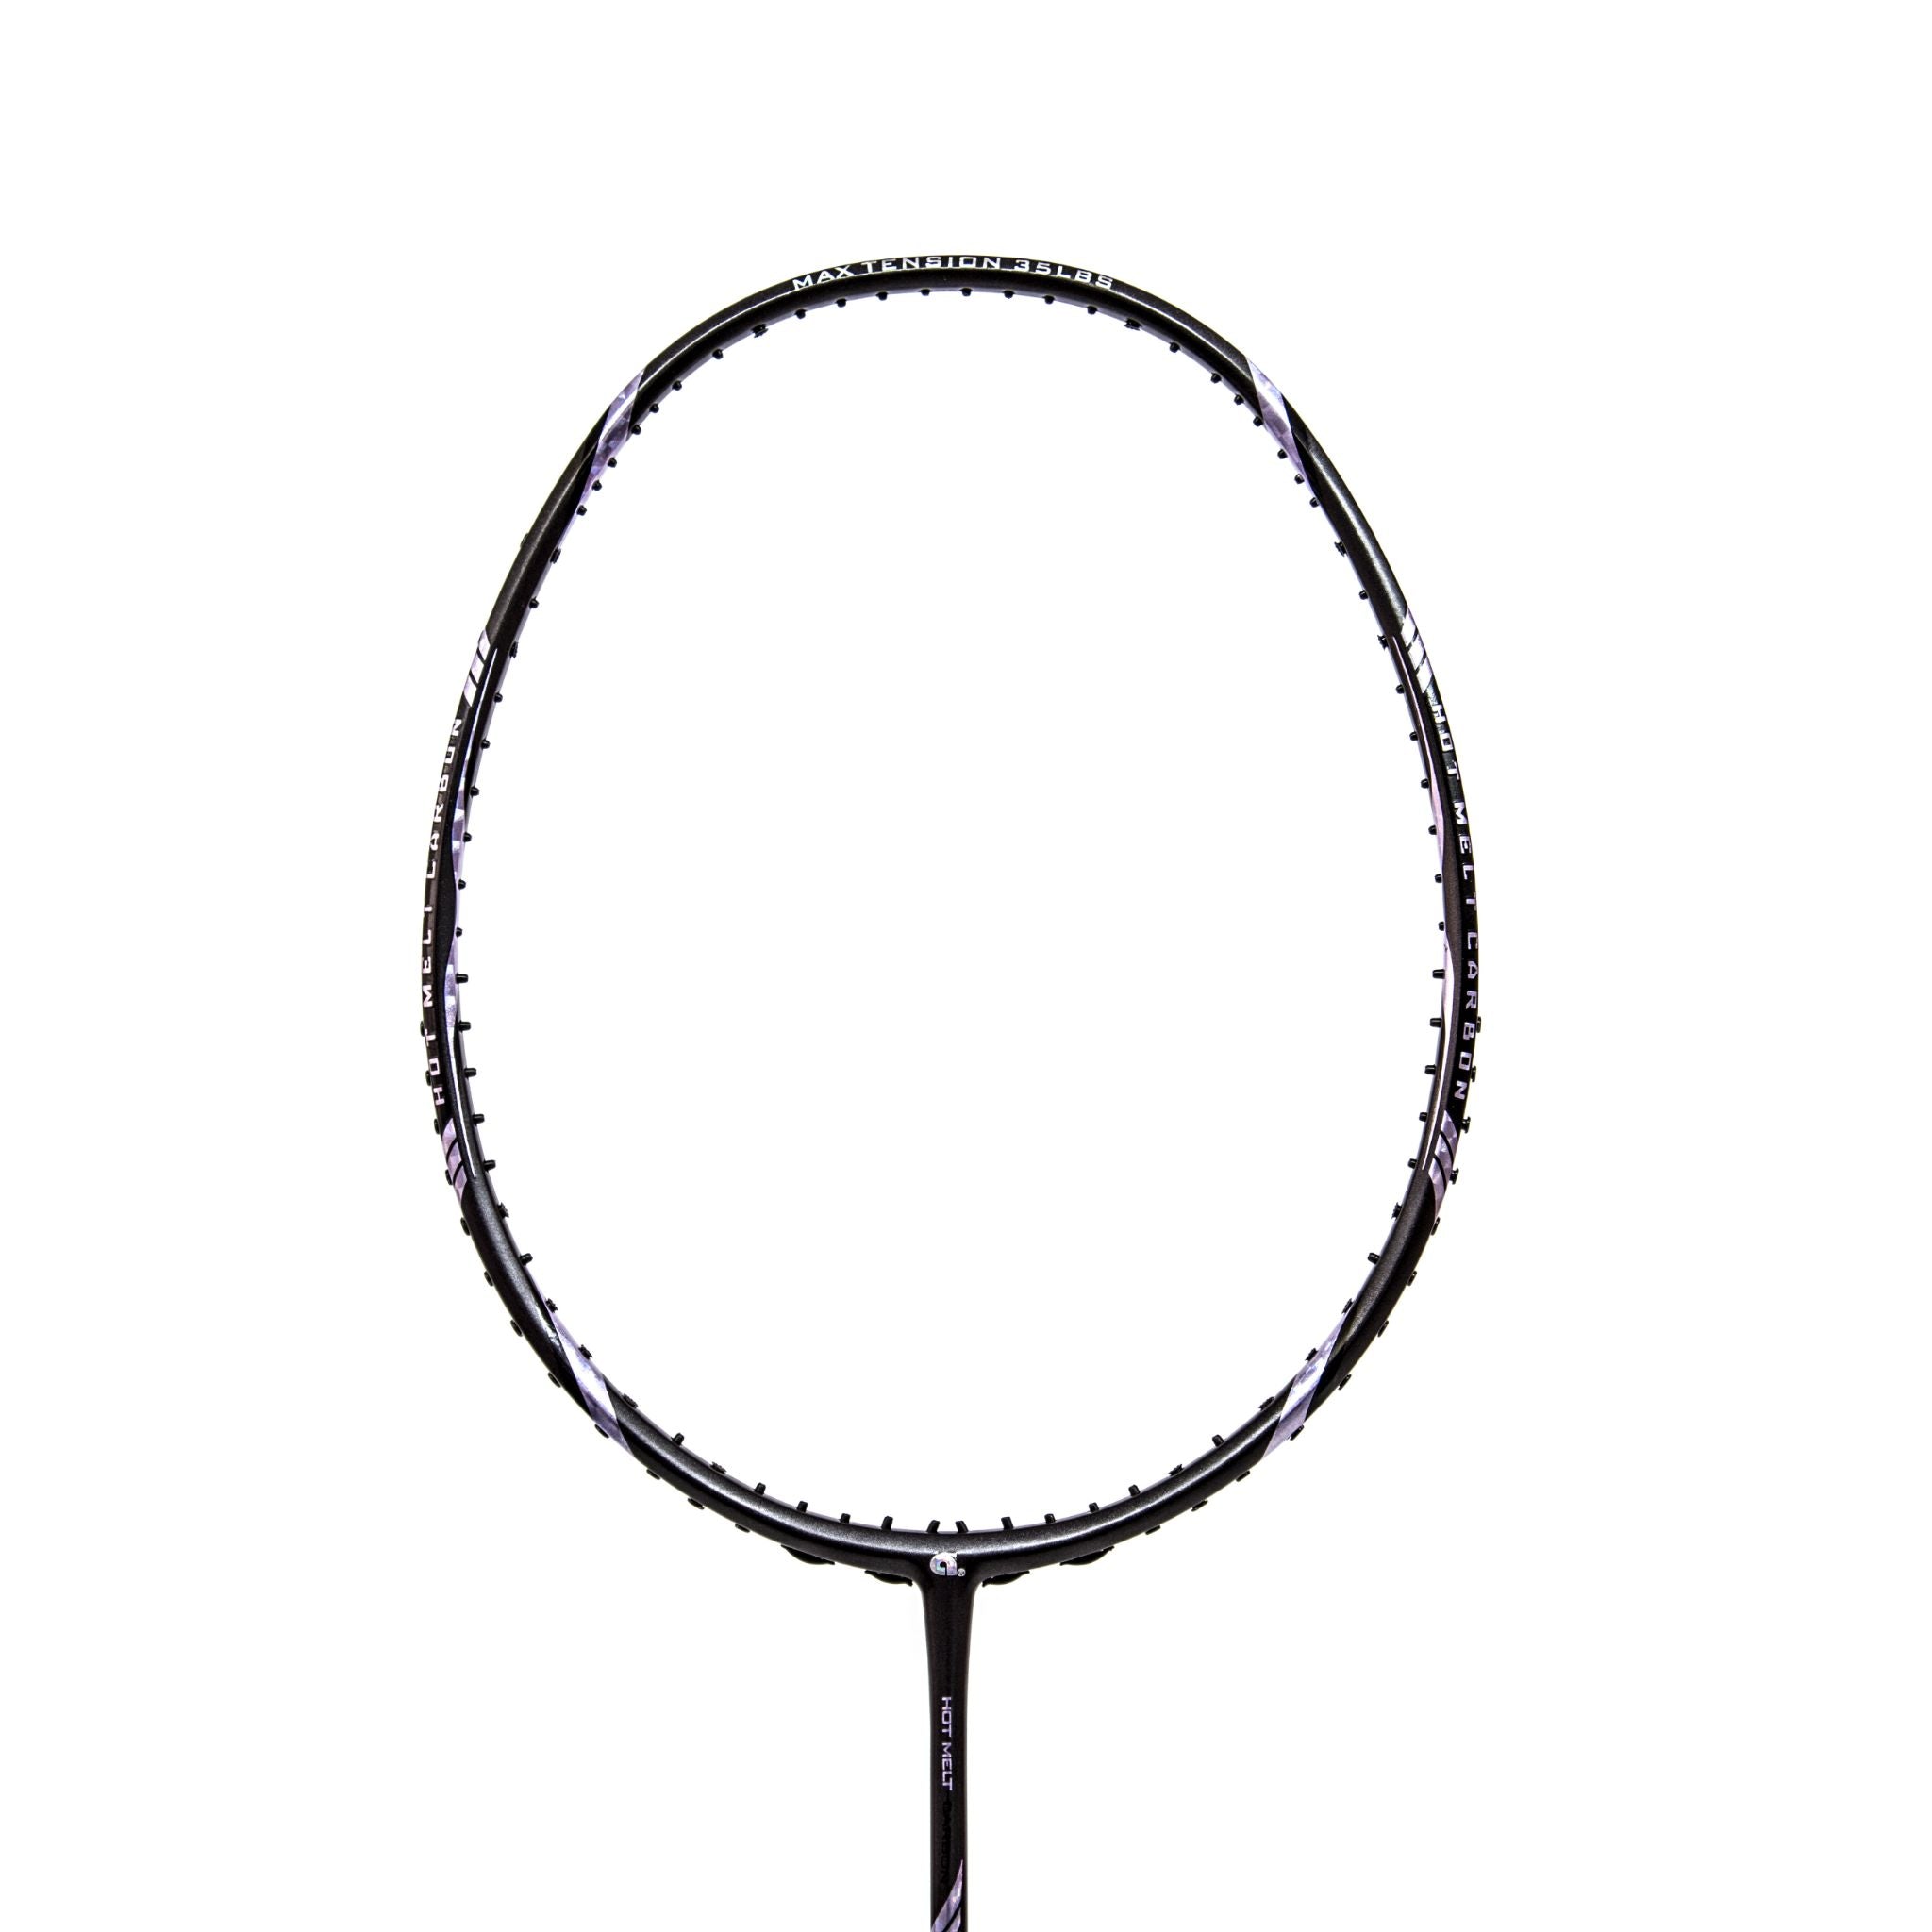 APACS Sizzle 66 Badminton Racket